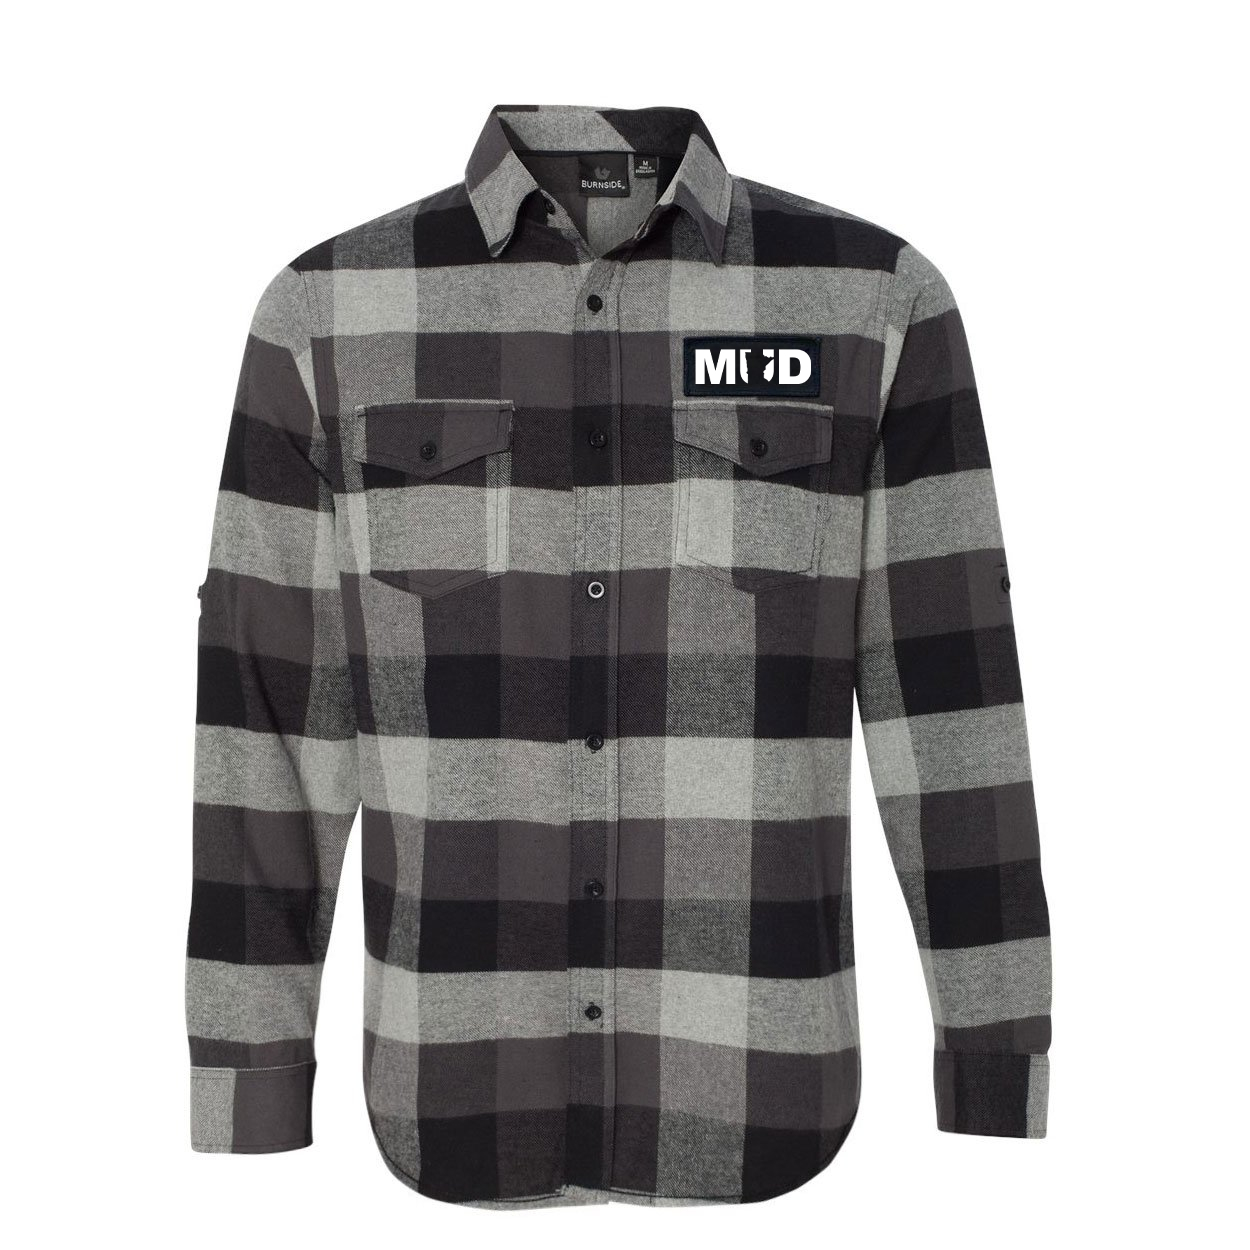 Mud Minnesota Classic Unisex Long Sleeve Woven Patch Flannel Shirt Black/Gray (White Logo)